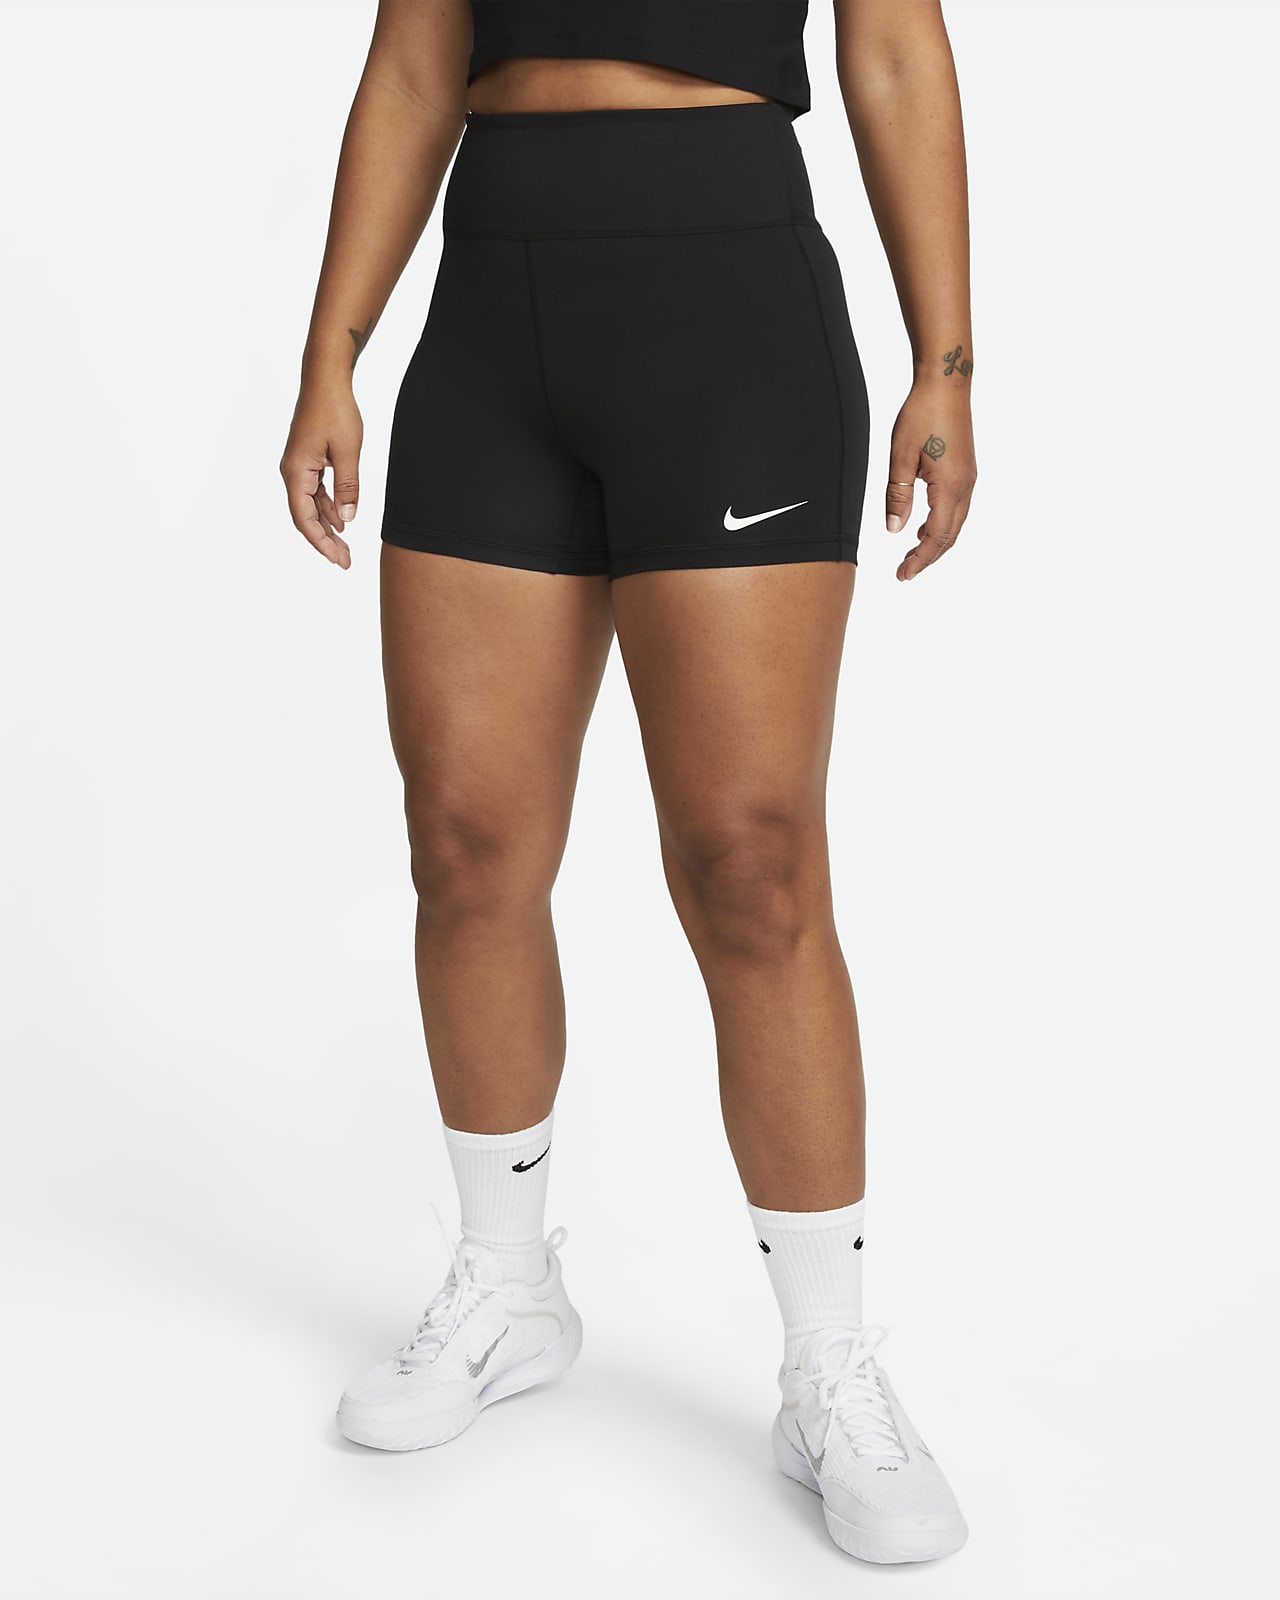 Nike Dri-FIT Advantage High-Waisted 4" Tennis